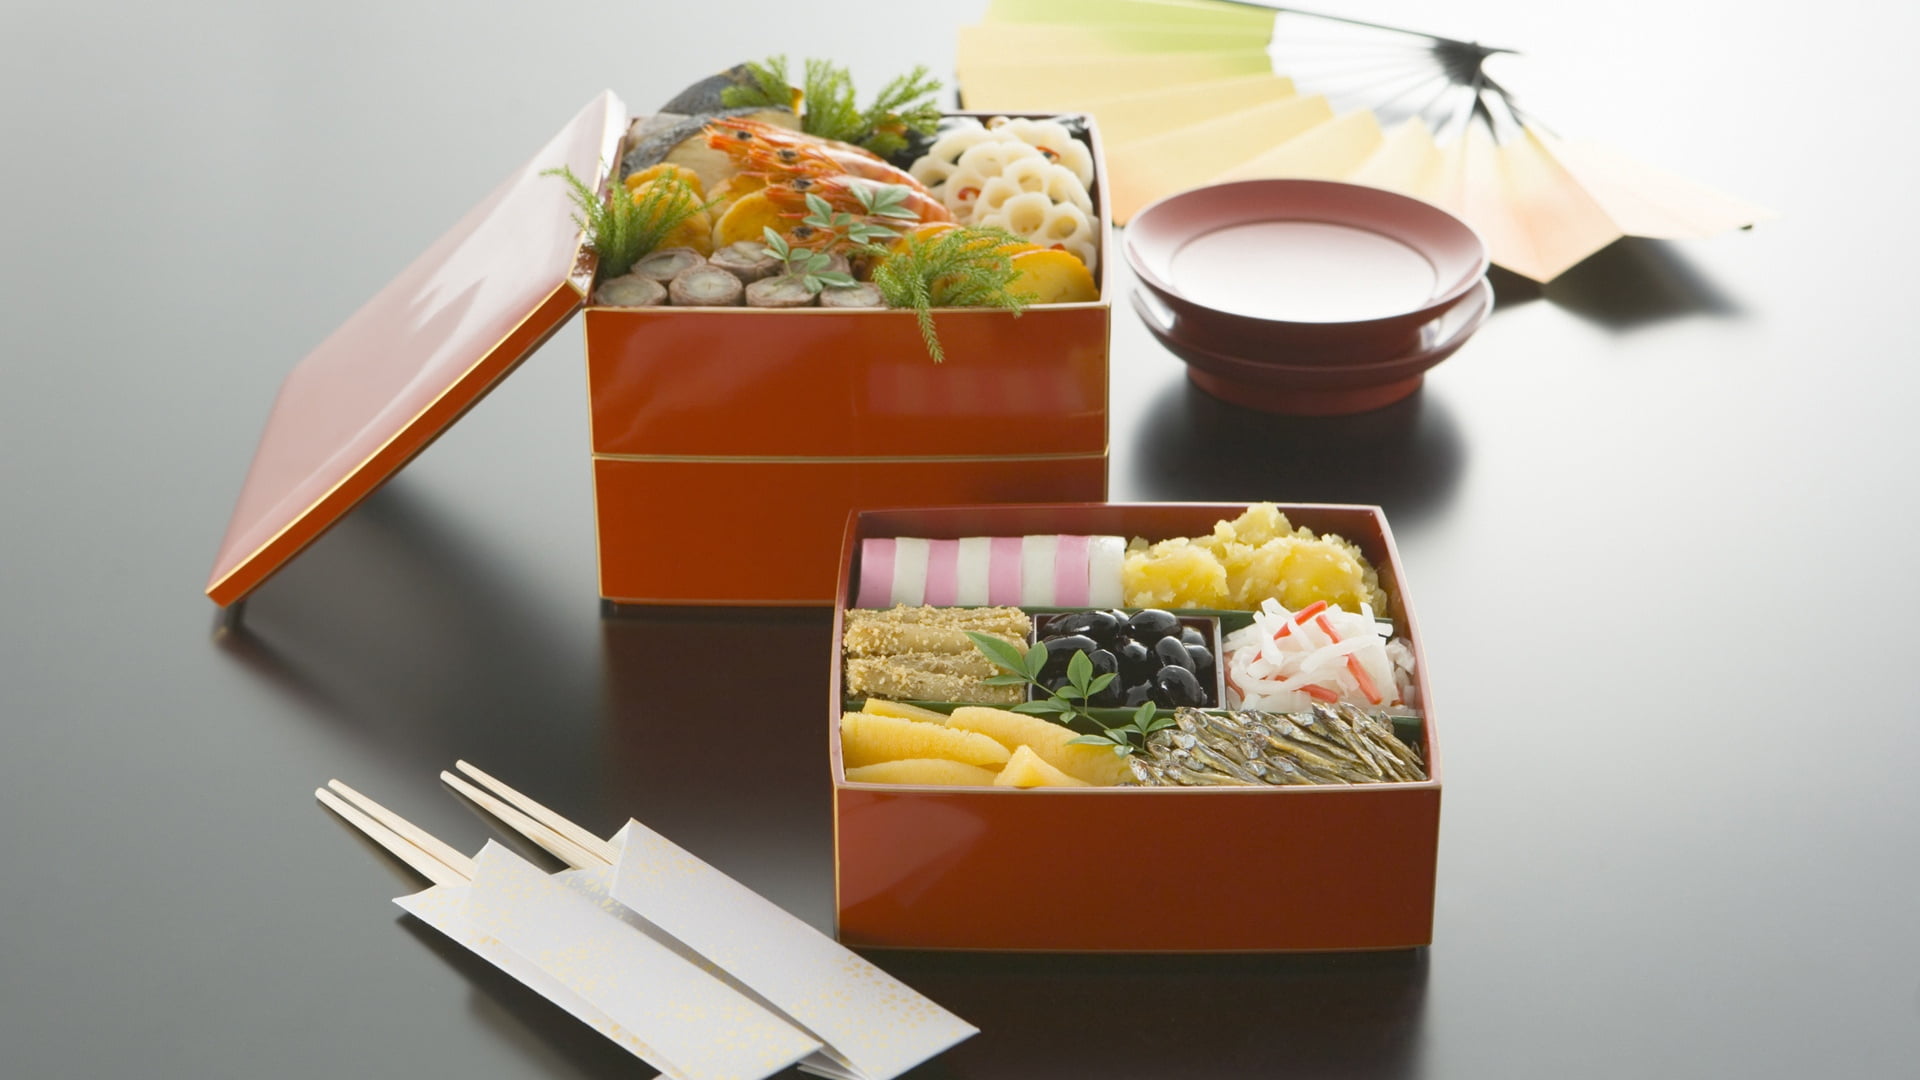 orange bento box, seafood, olives, chinese cuisine, meal, chopsticks